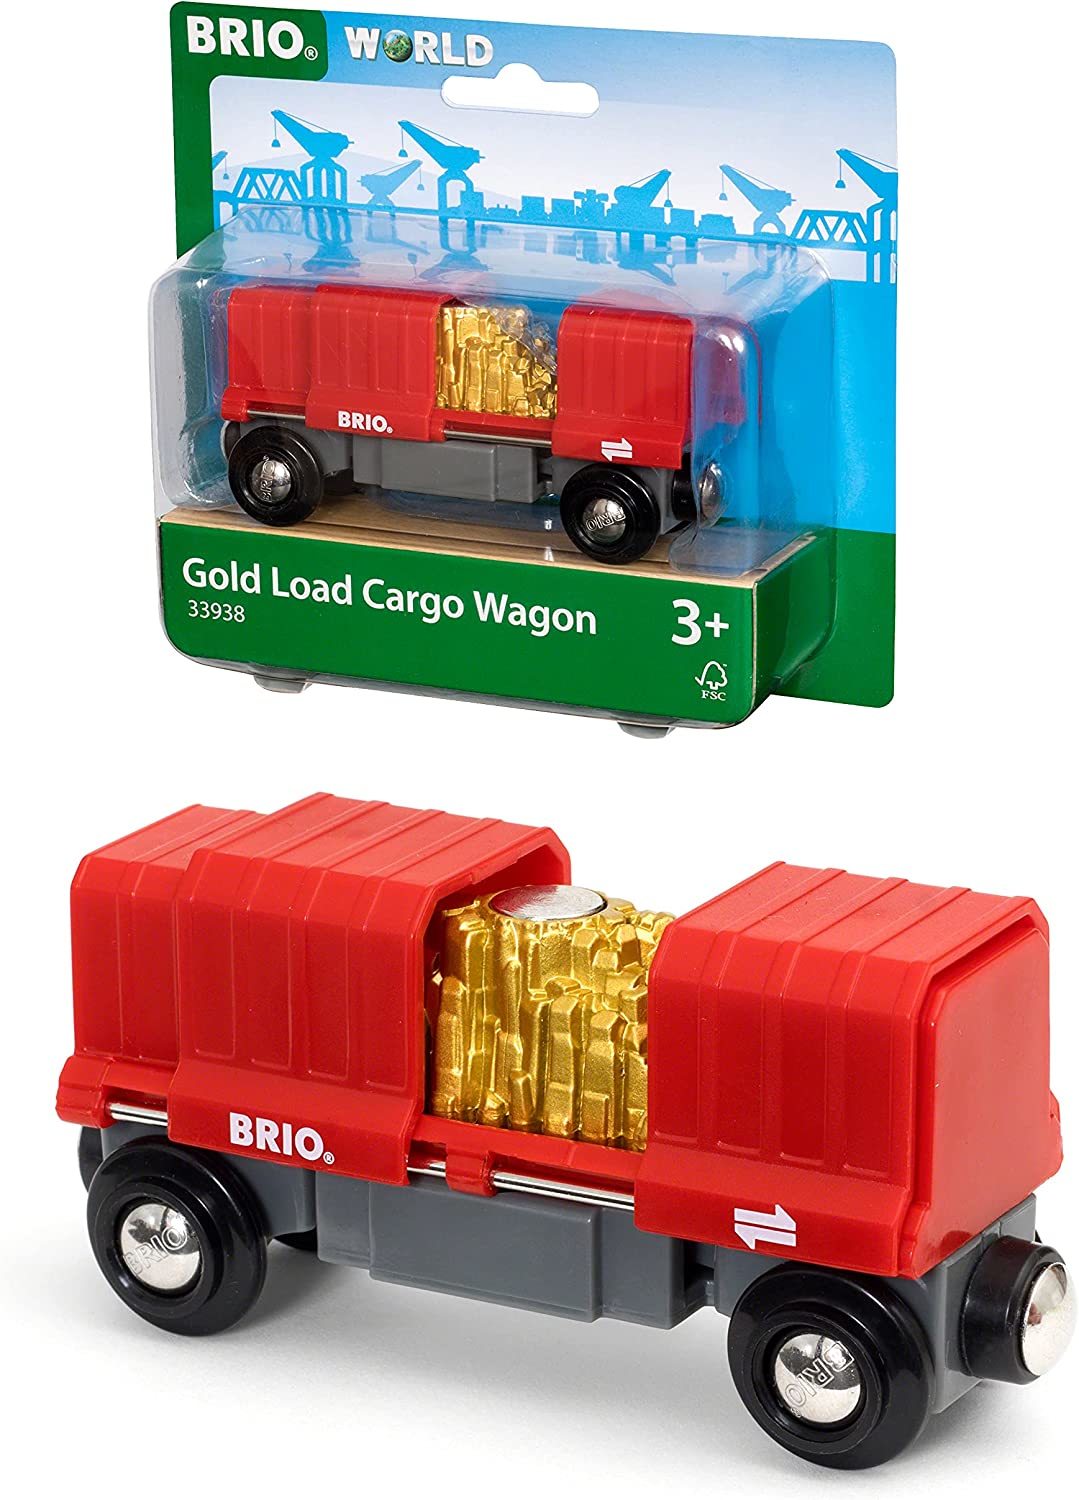 Brio World Gold Load Cargo Wagon 33938